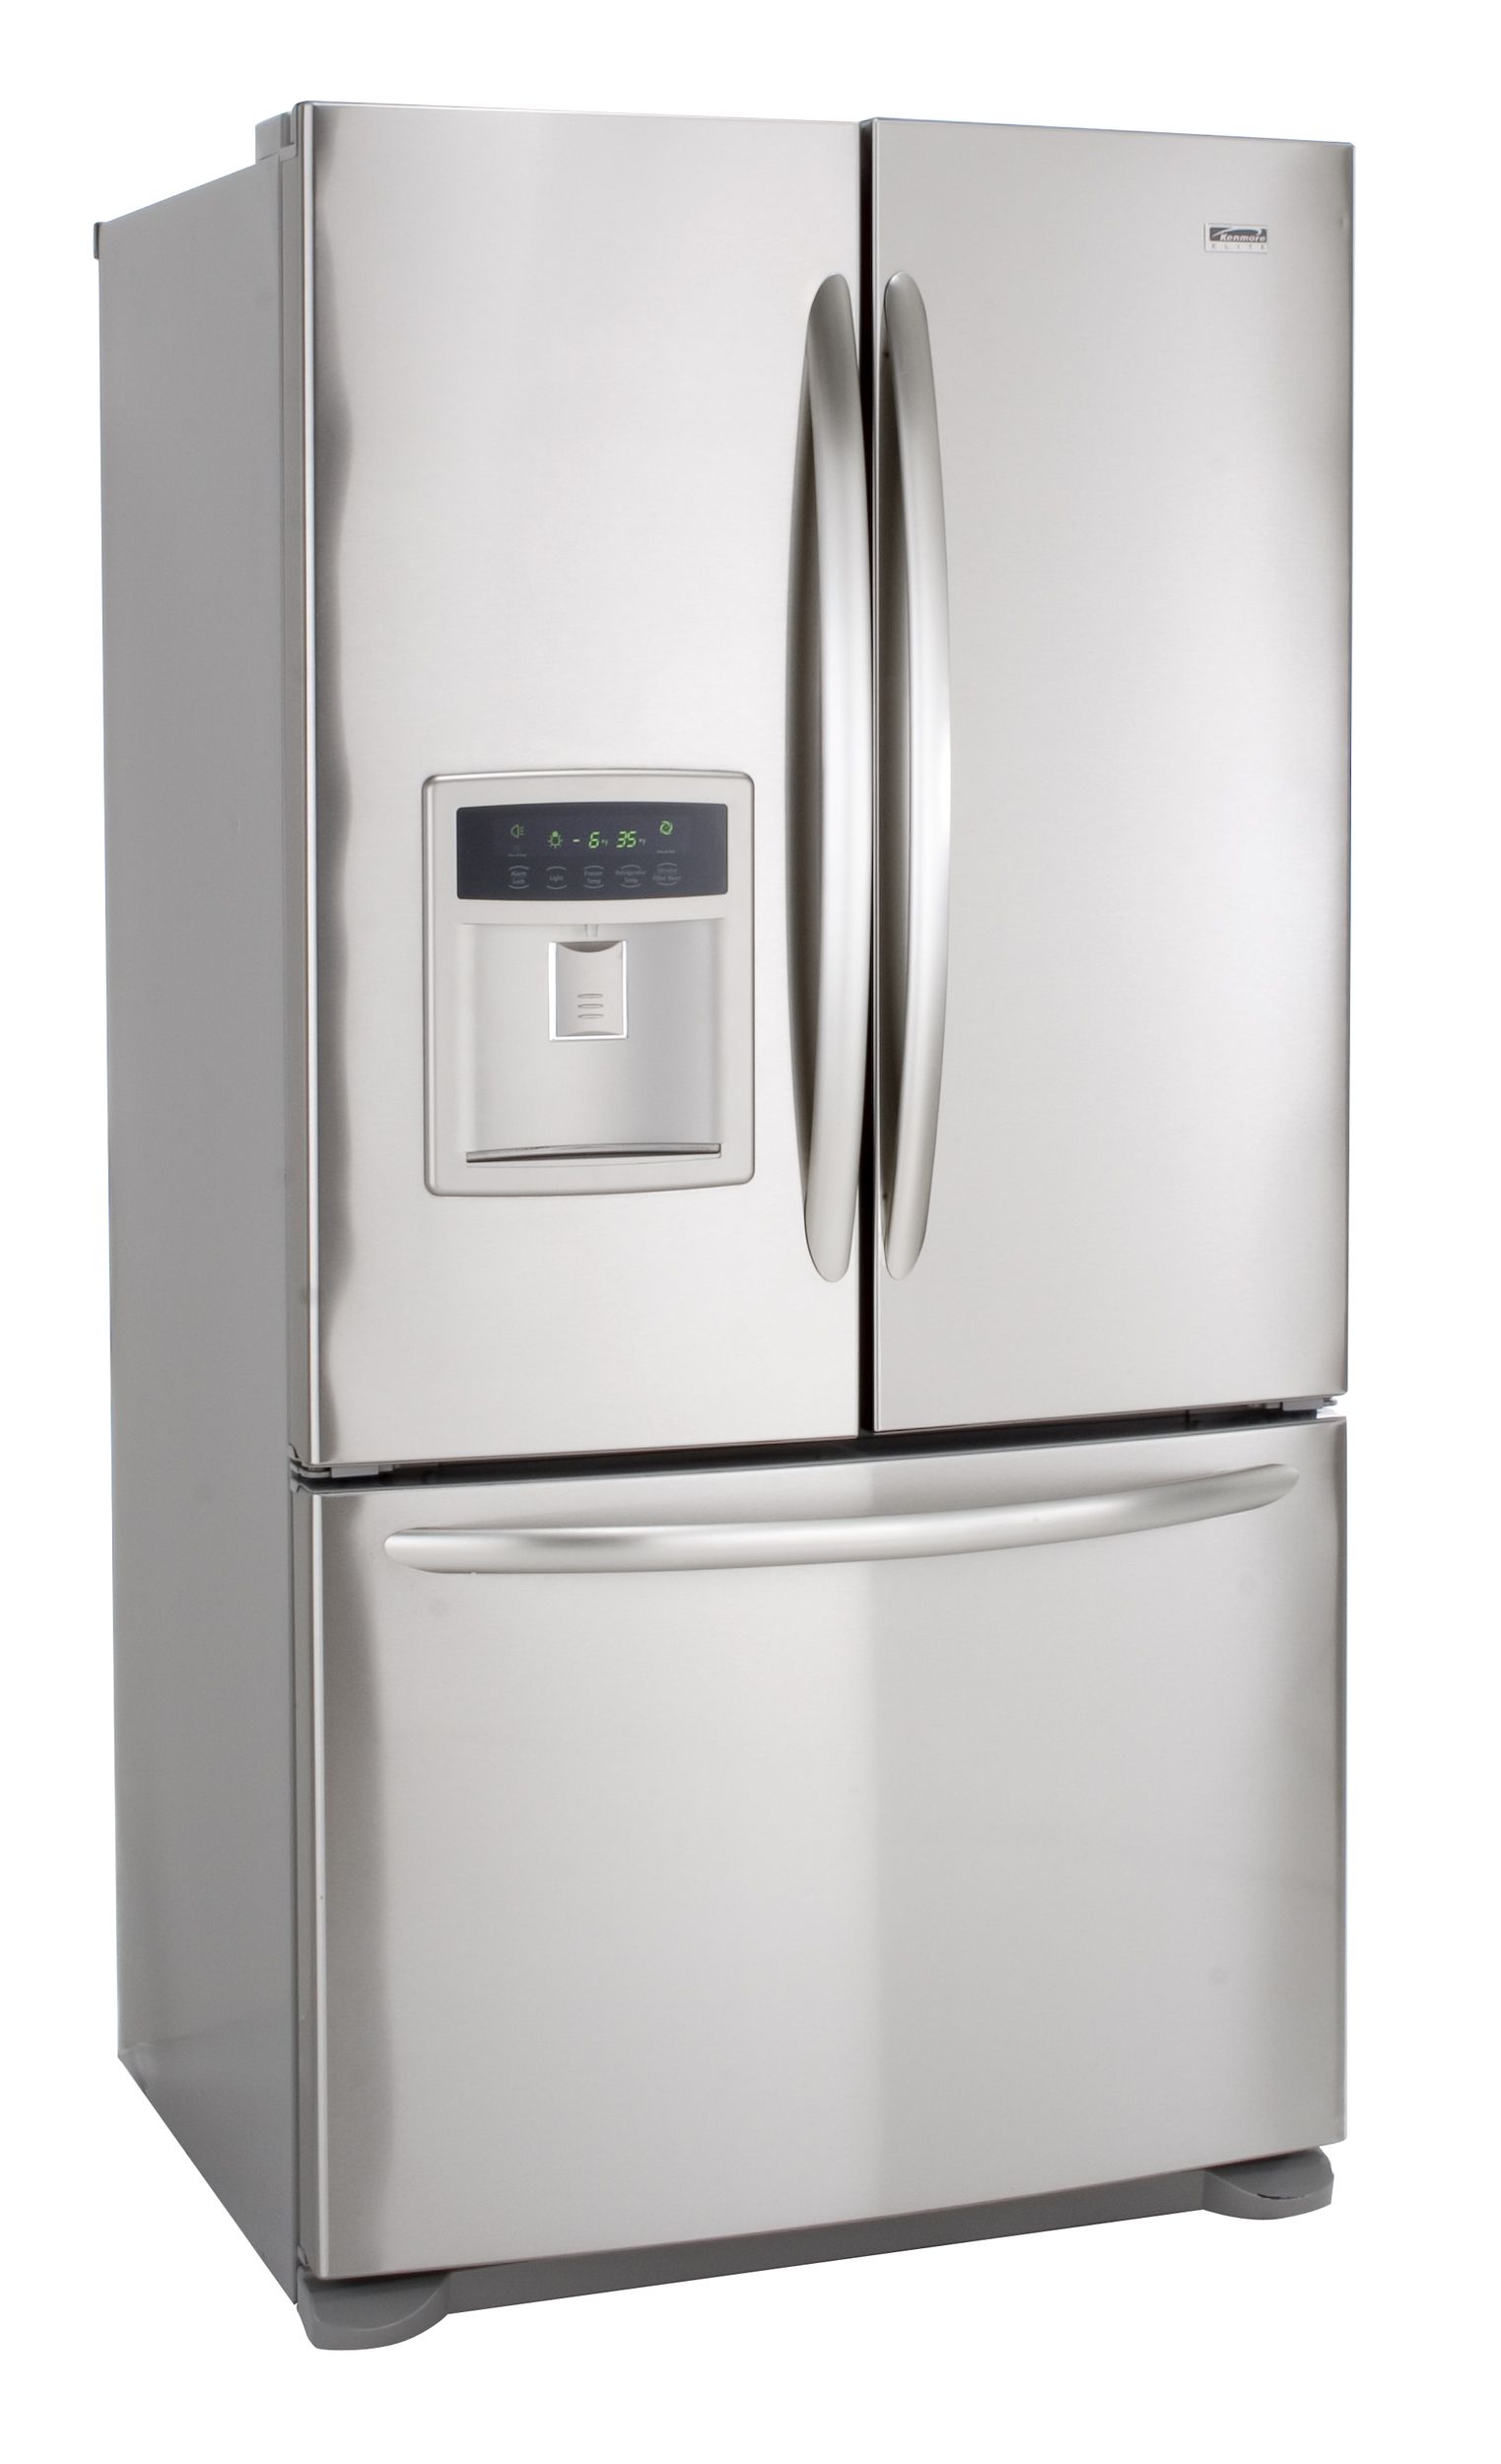 49+ Kenmore elite refrigerator vibration noise information